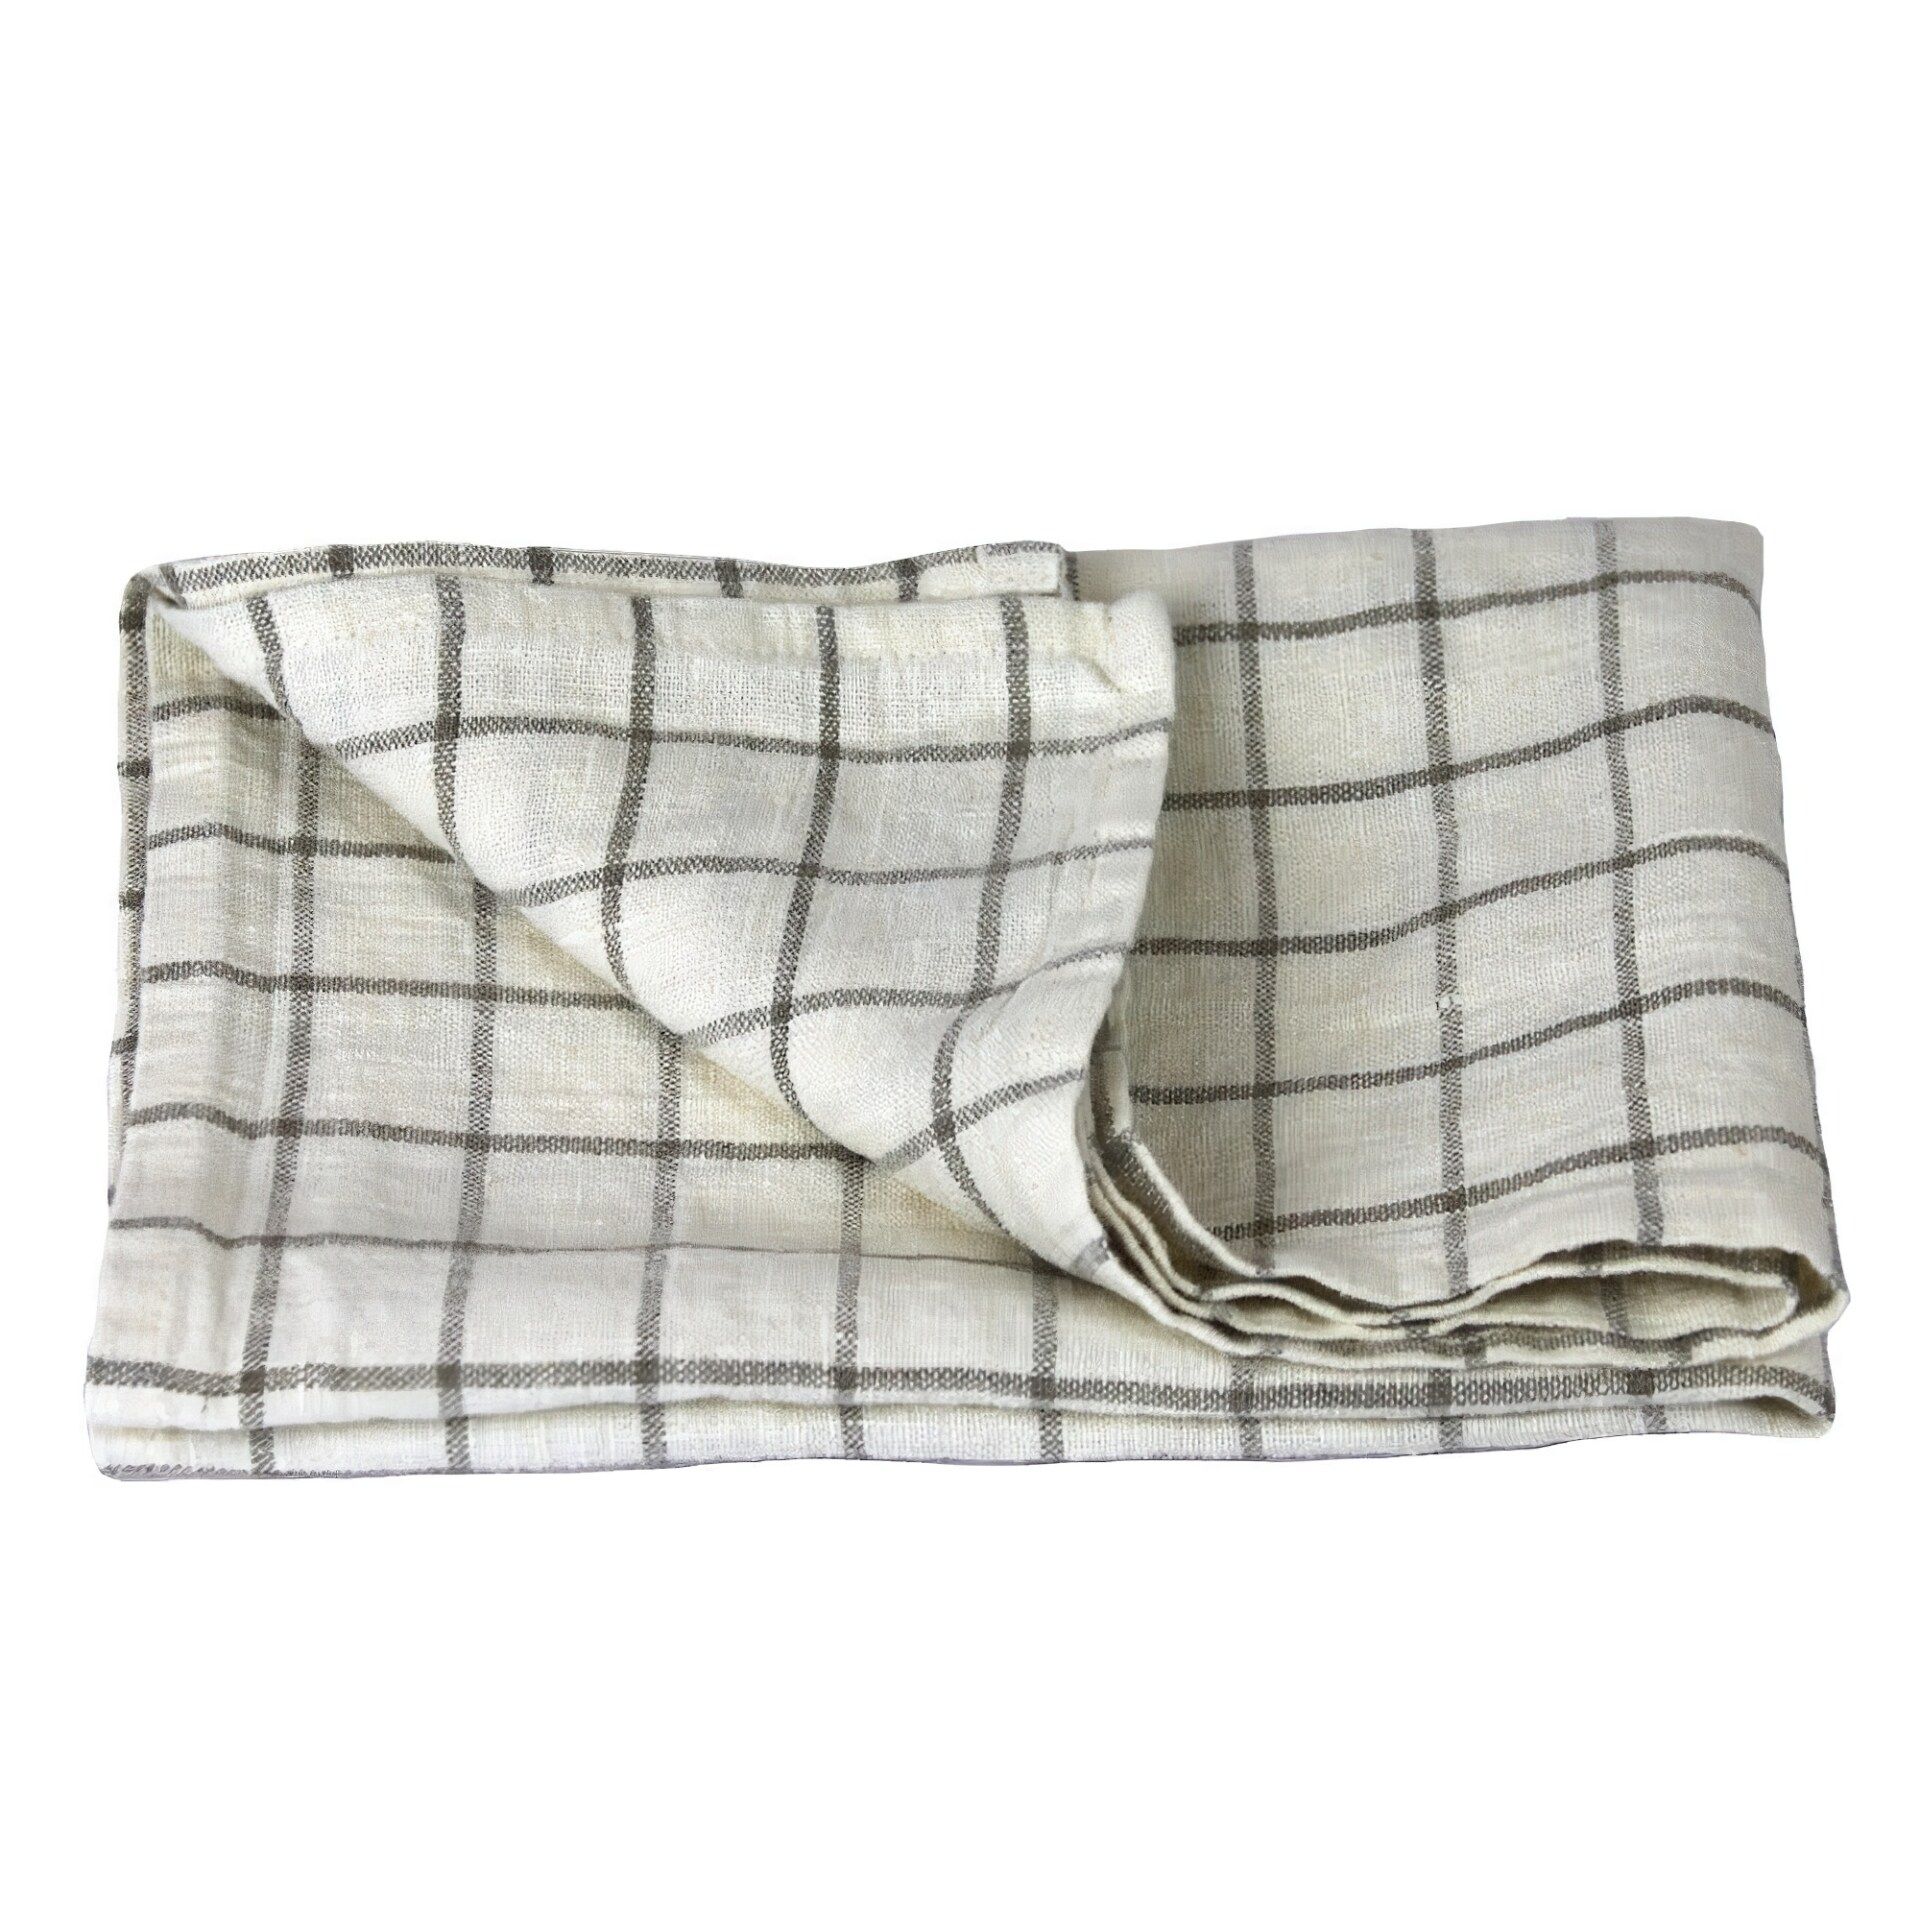 LinenCasa Linen Bath or Beach Towel - Luxury Thick Stonewashed